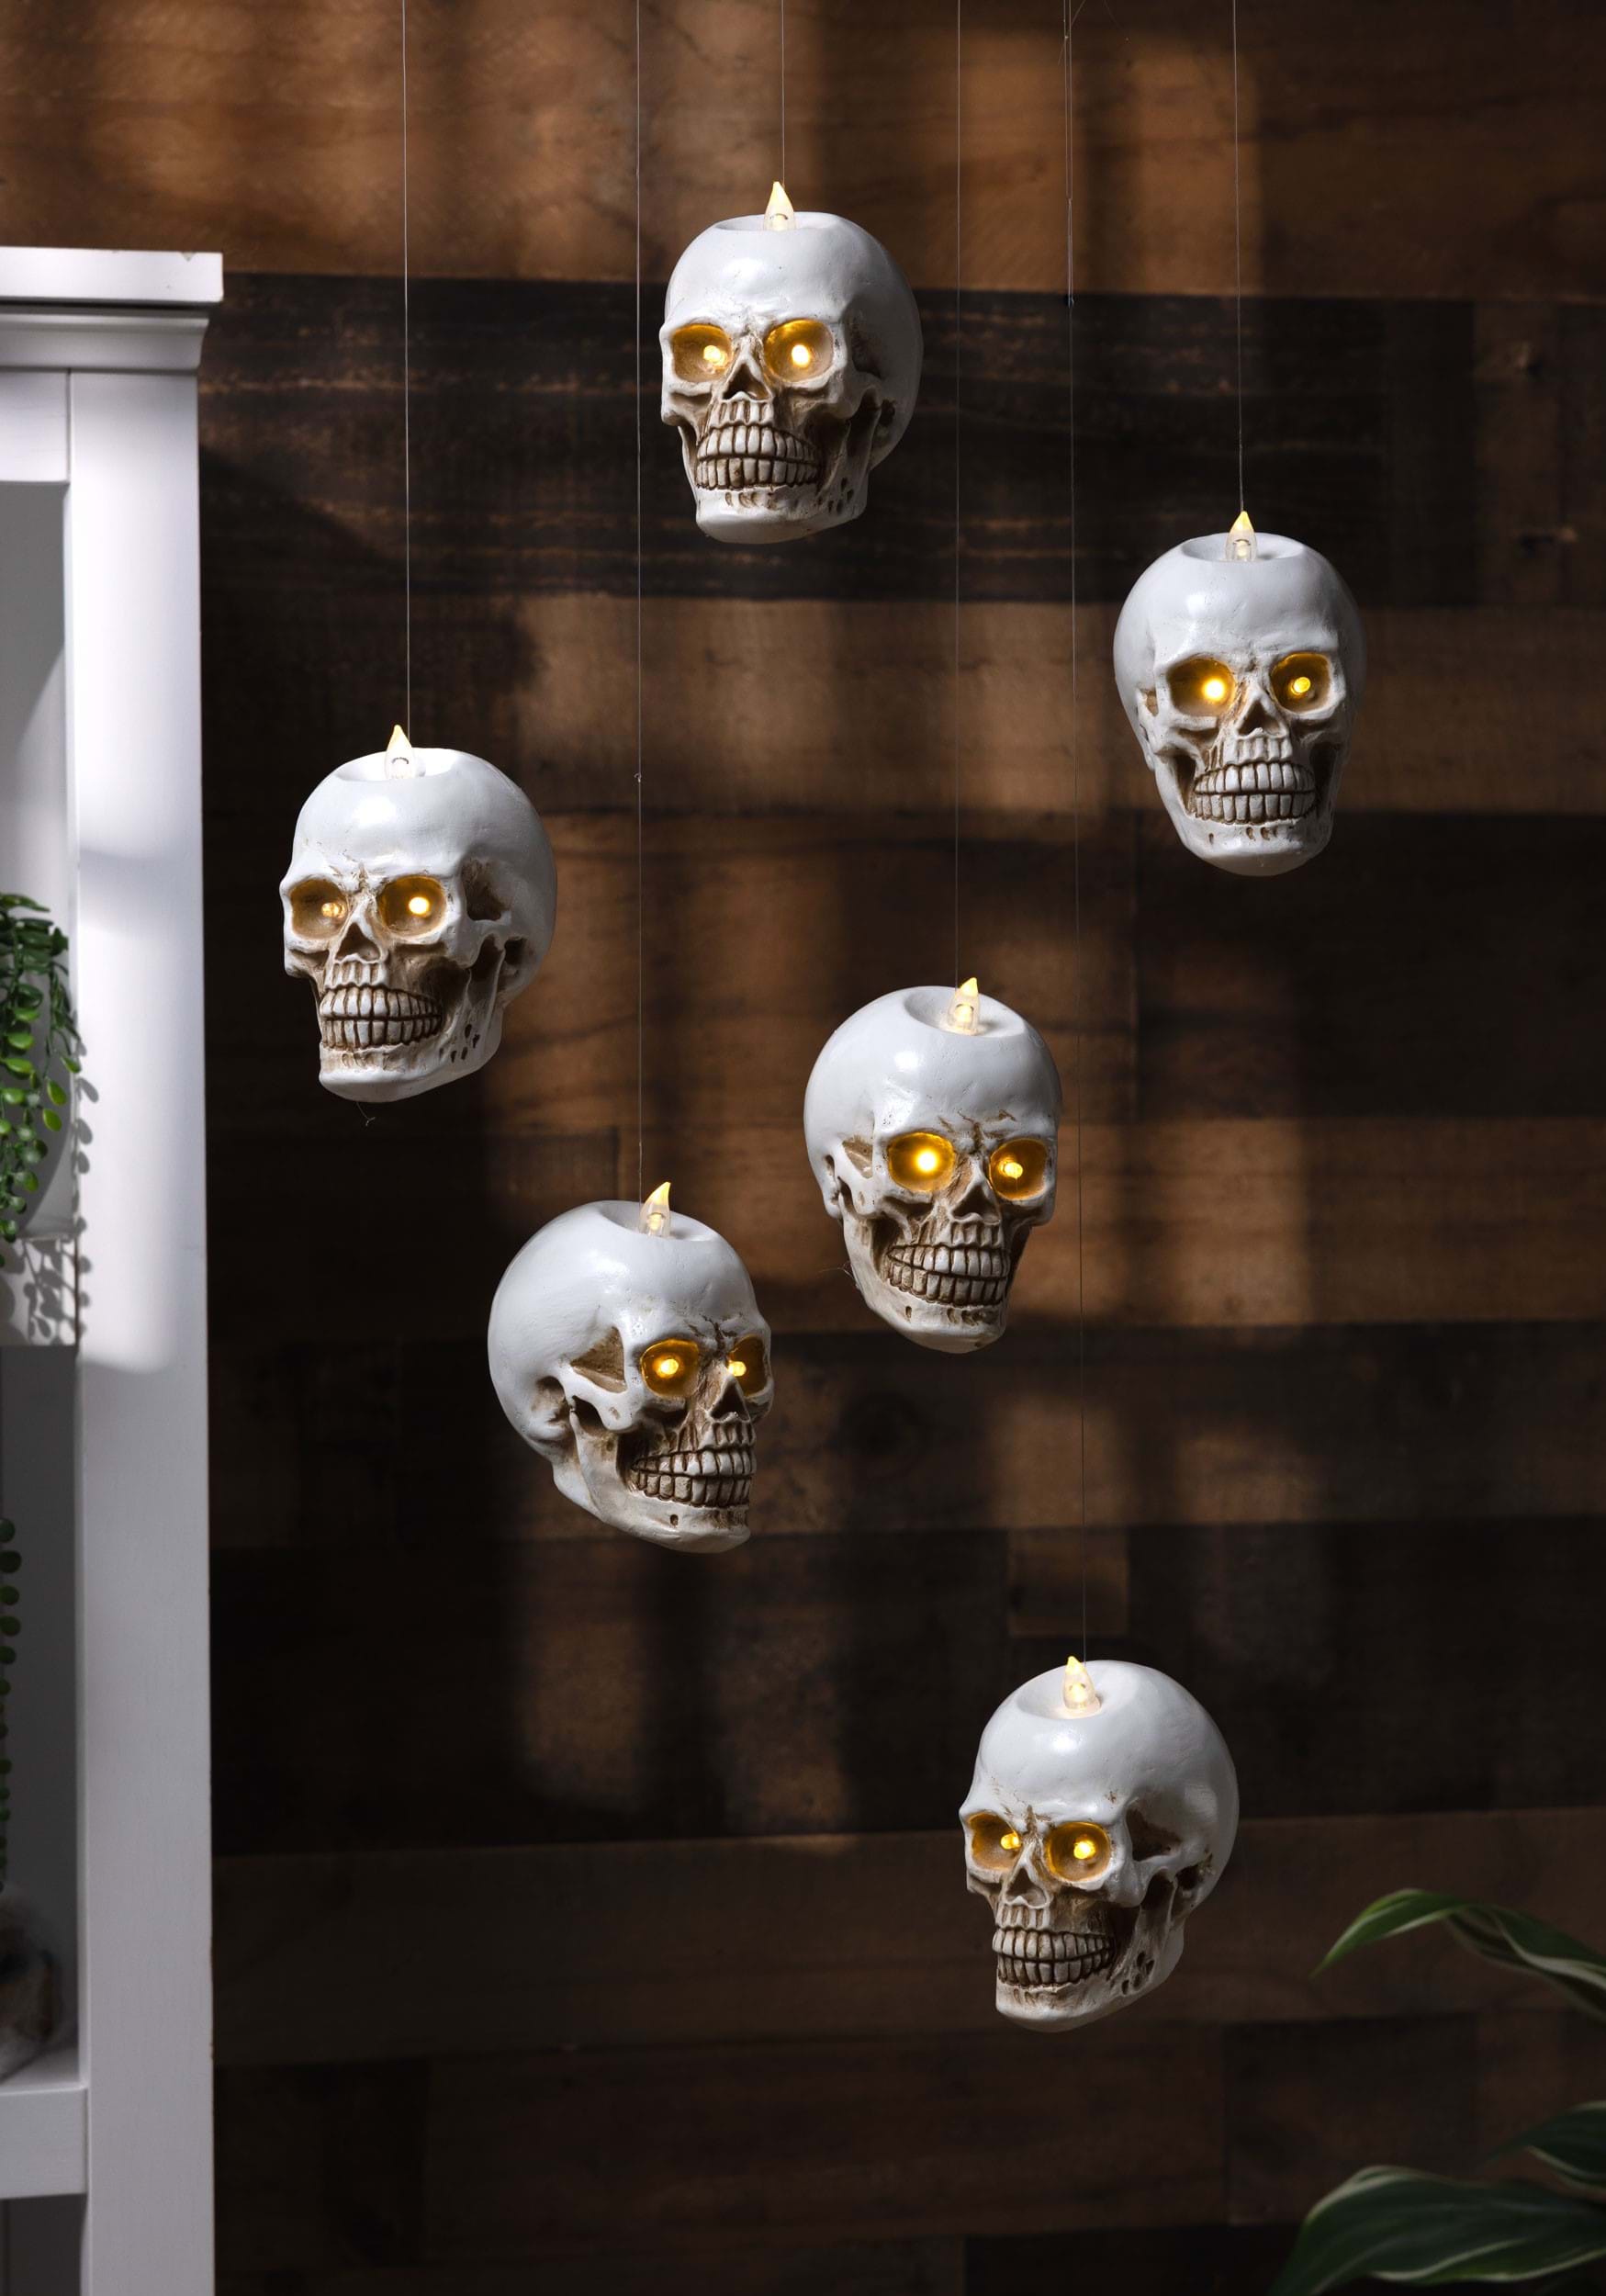 6 Light Up Hanging Skulls Prop with Remote Control | Halloween Lights